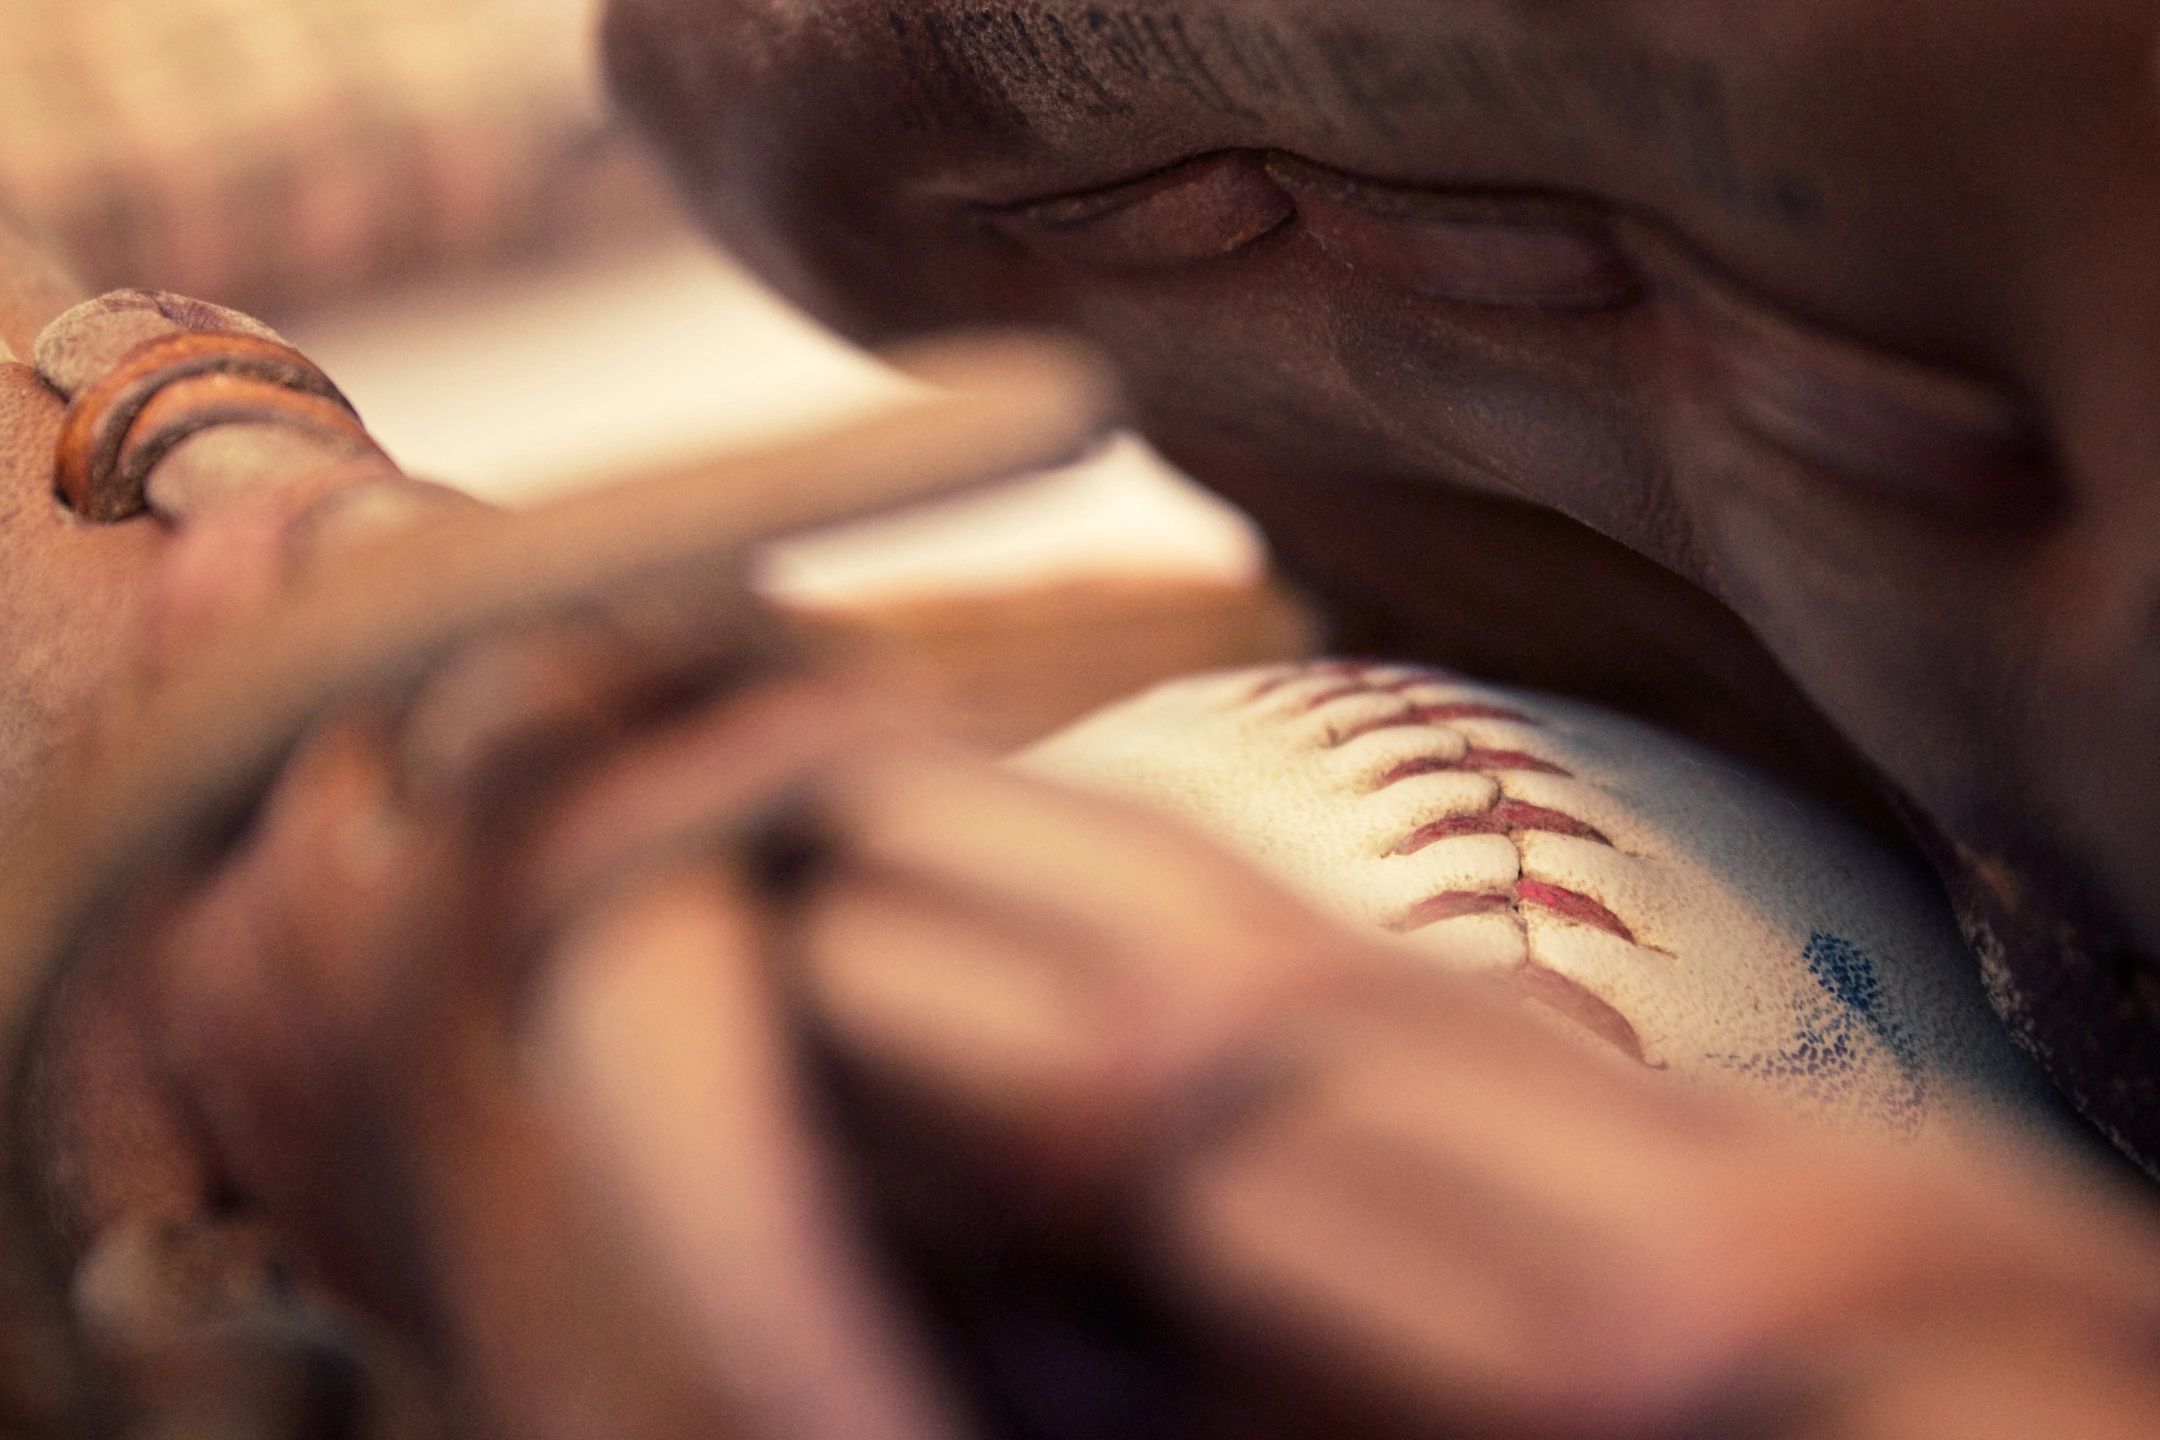 MLB's Josh Hader to Take Sensitivity Training After Old Tweets Surface